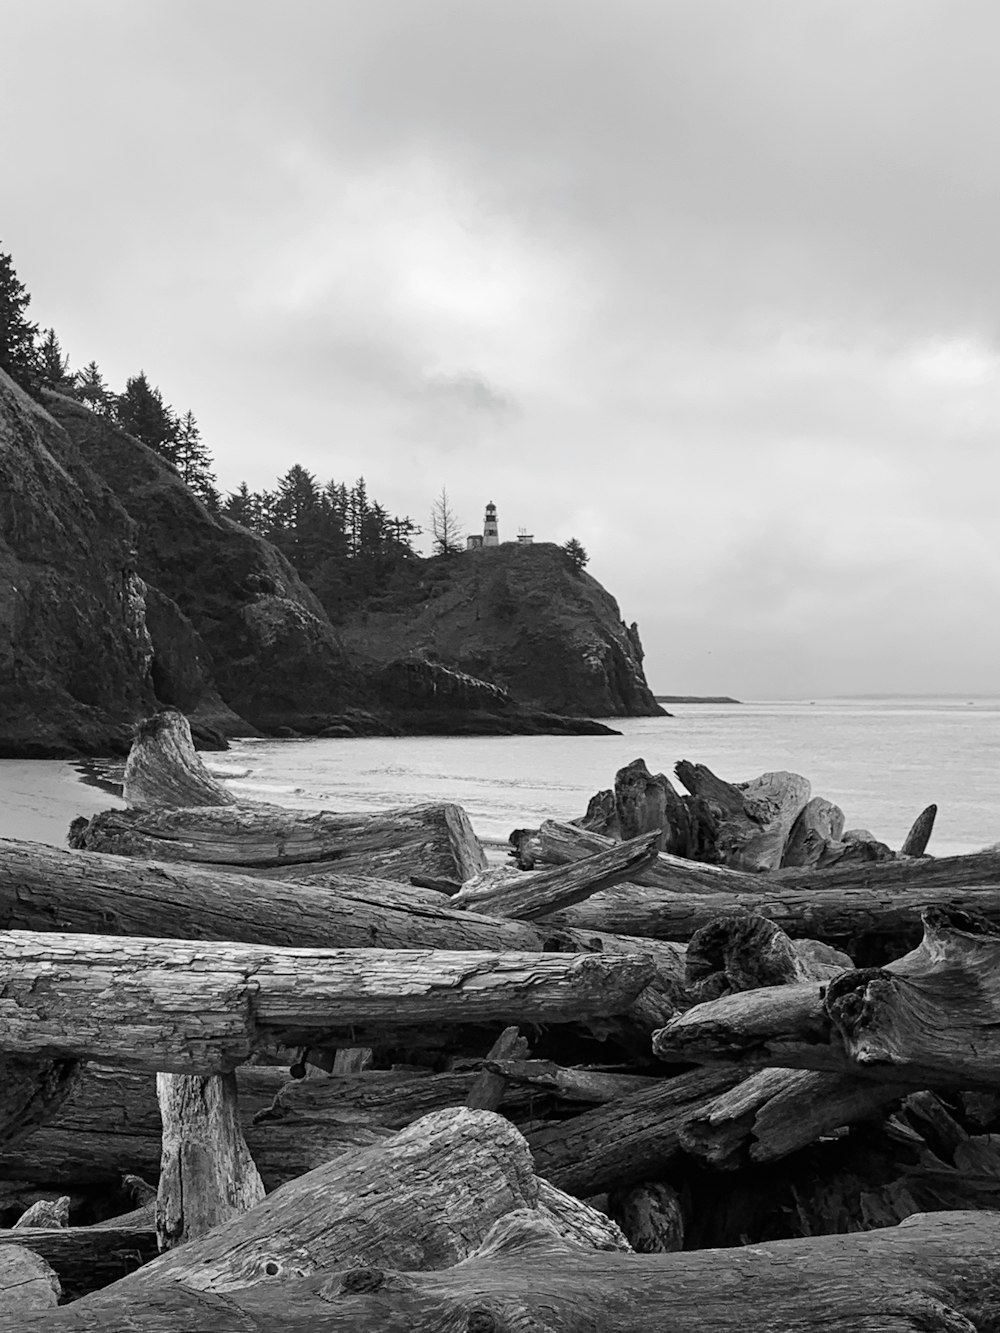 grayscale photo of wood log on beach